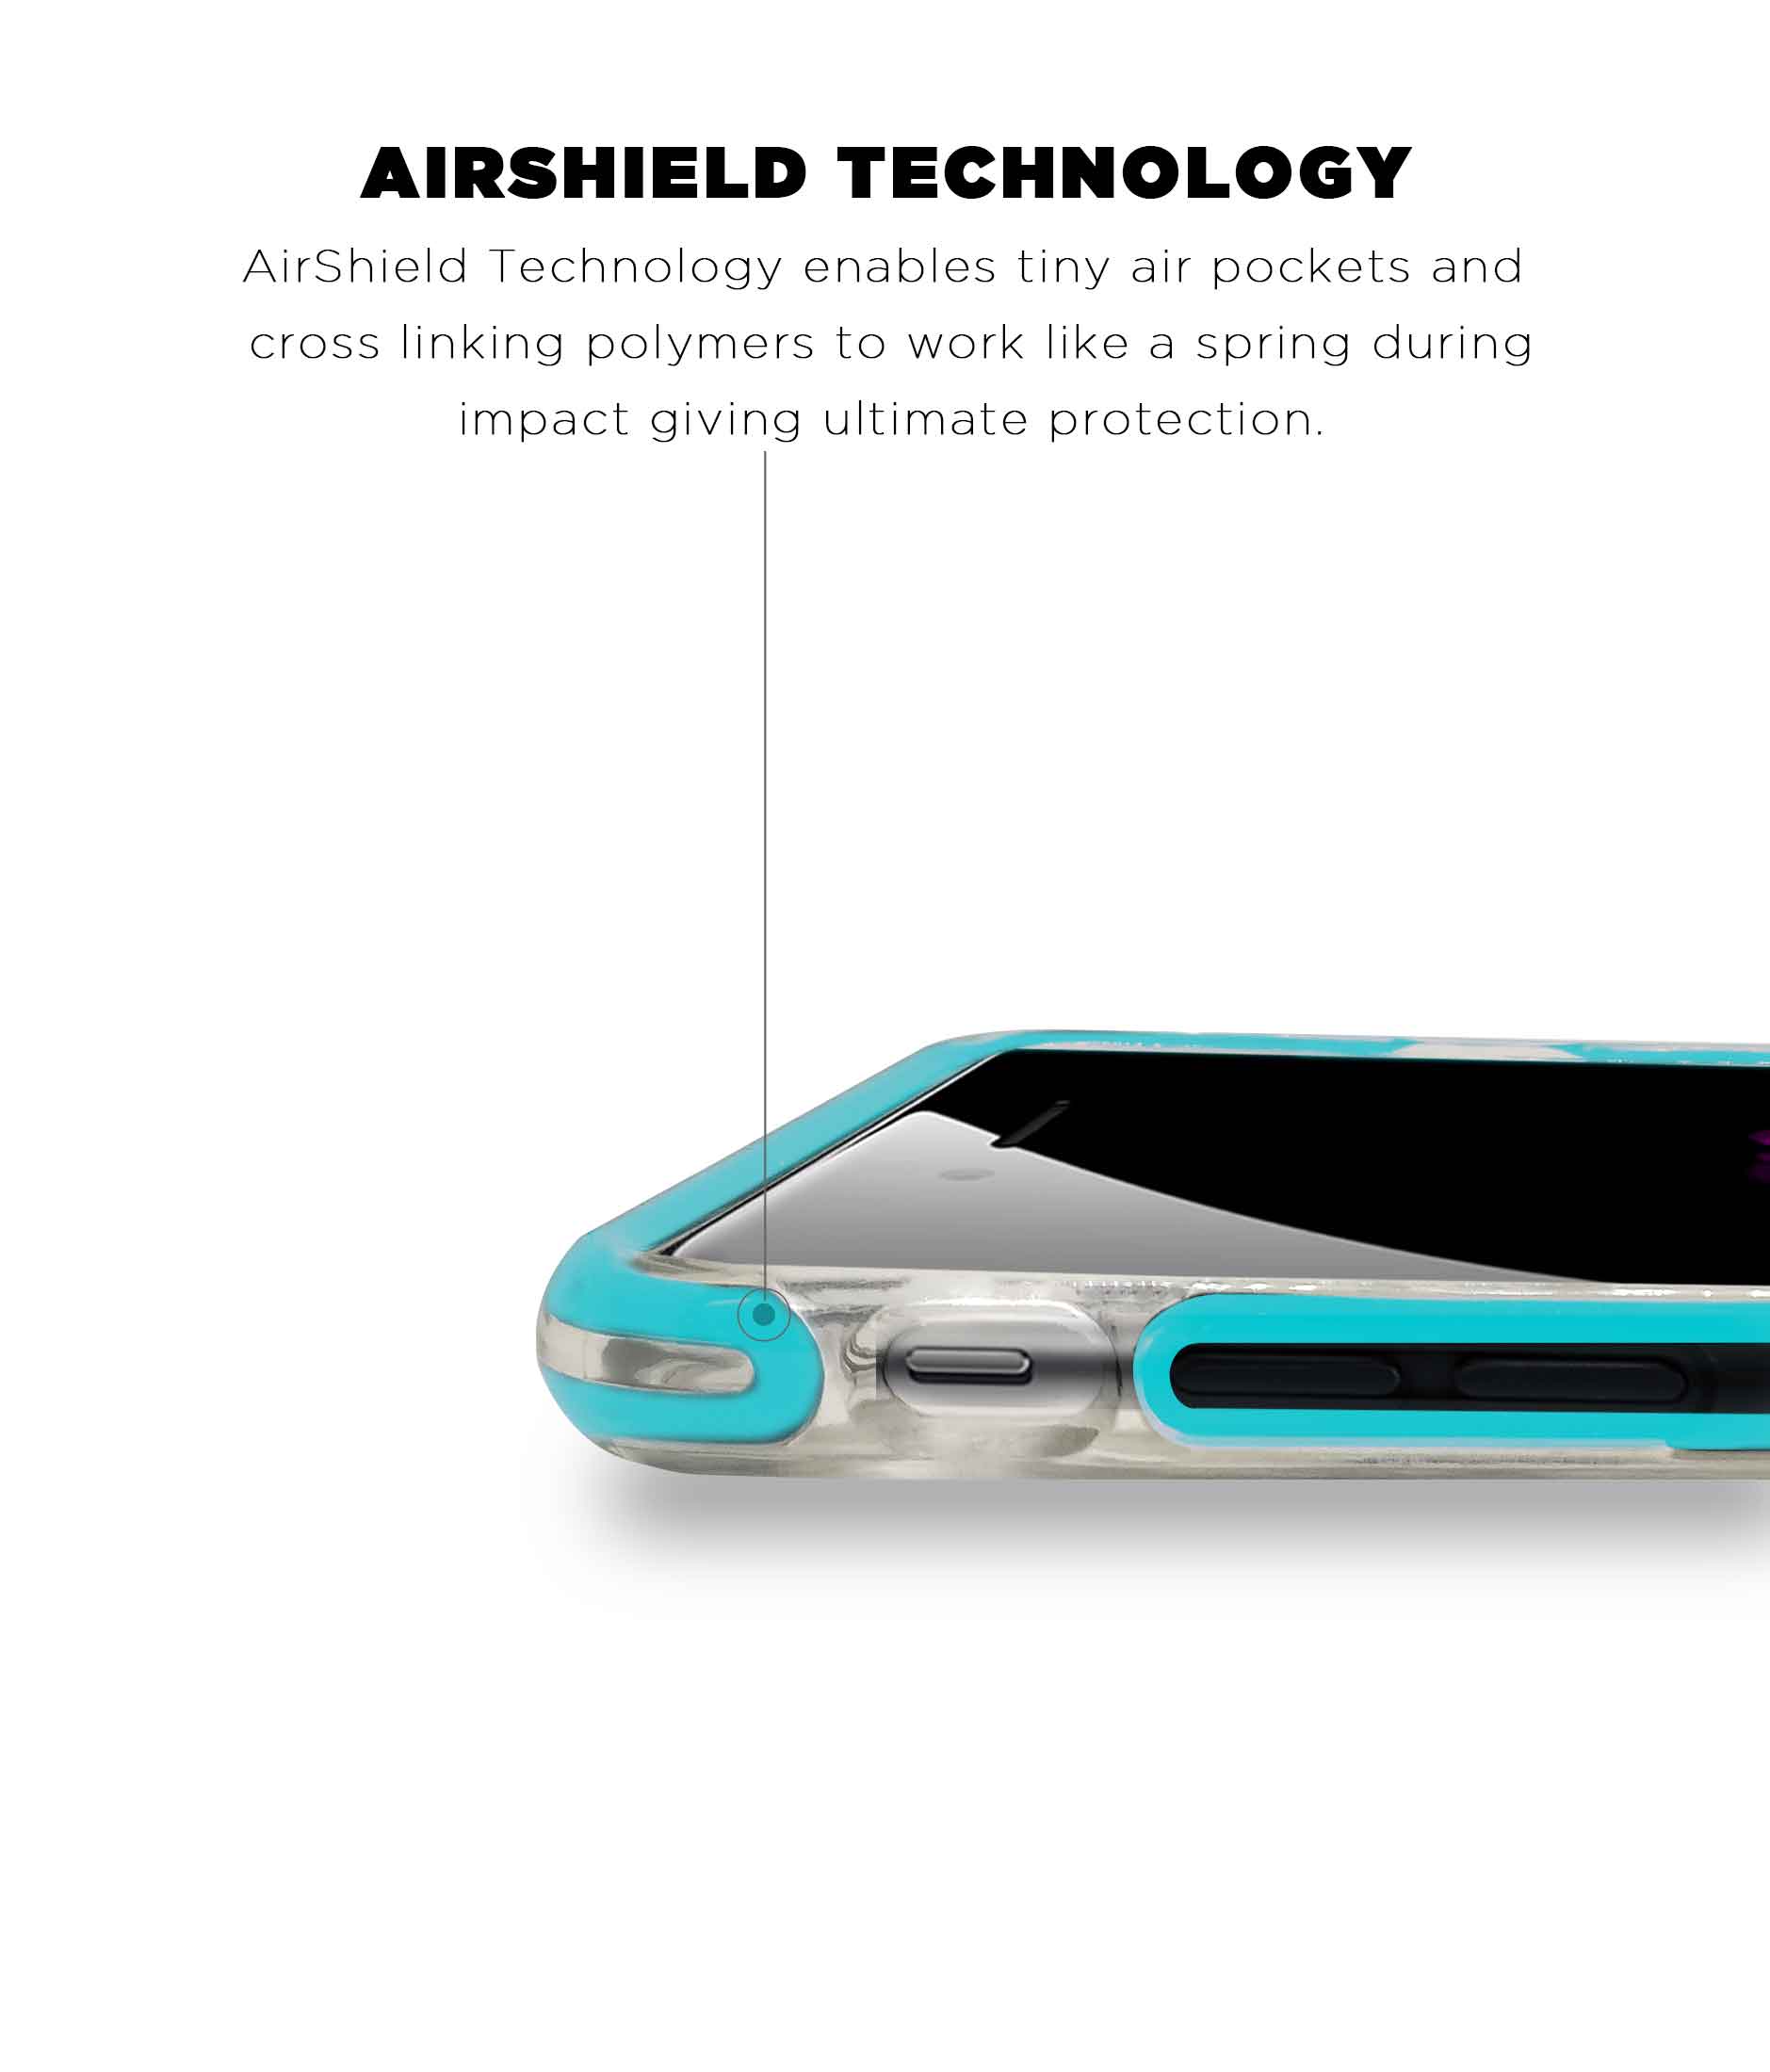 Illuminated Ironman - Extreme Phone Case for iPhone 6S